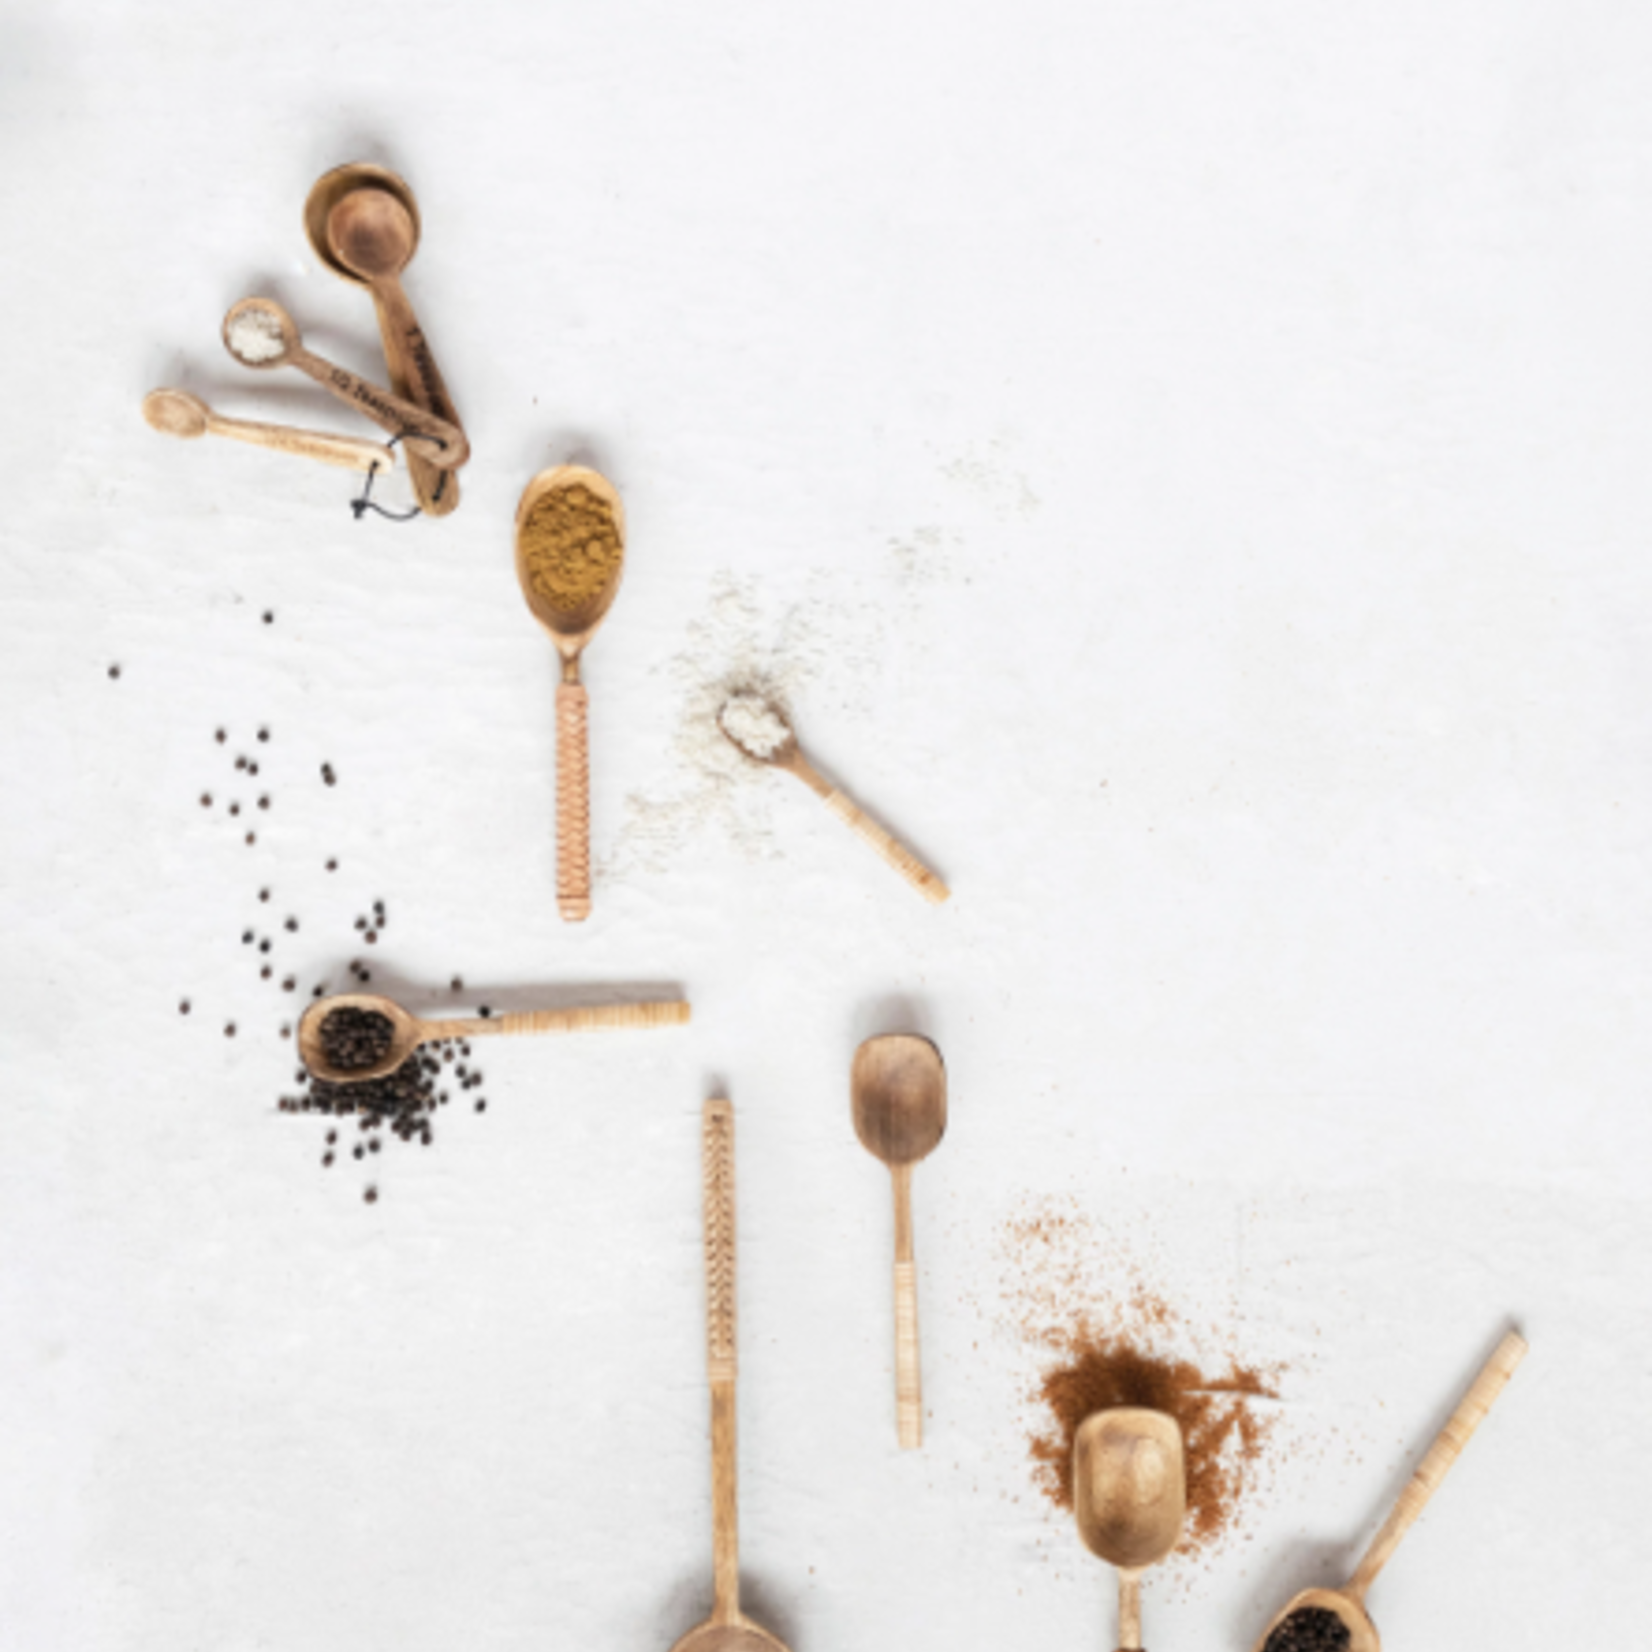 creative Co-op Mango Wood Measuring Spoons